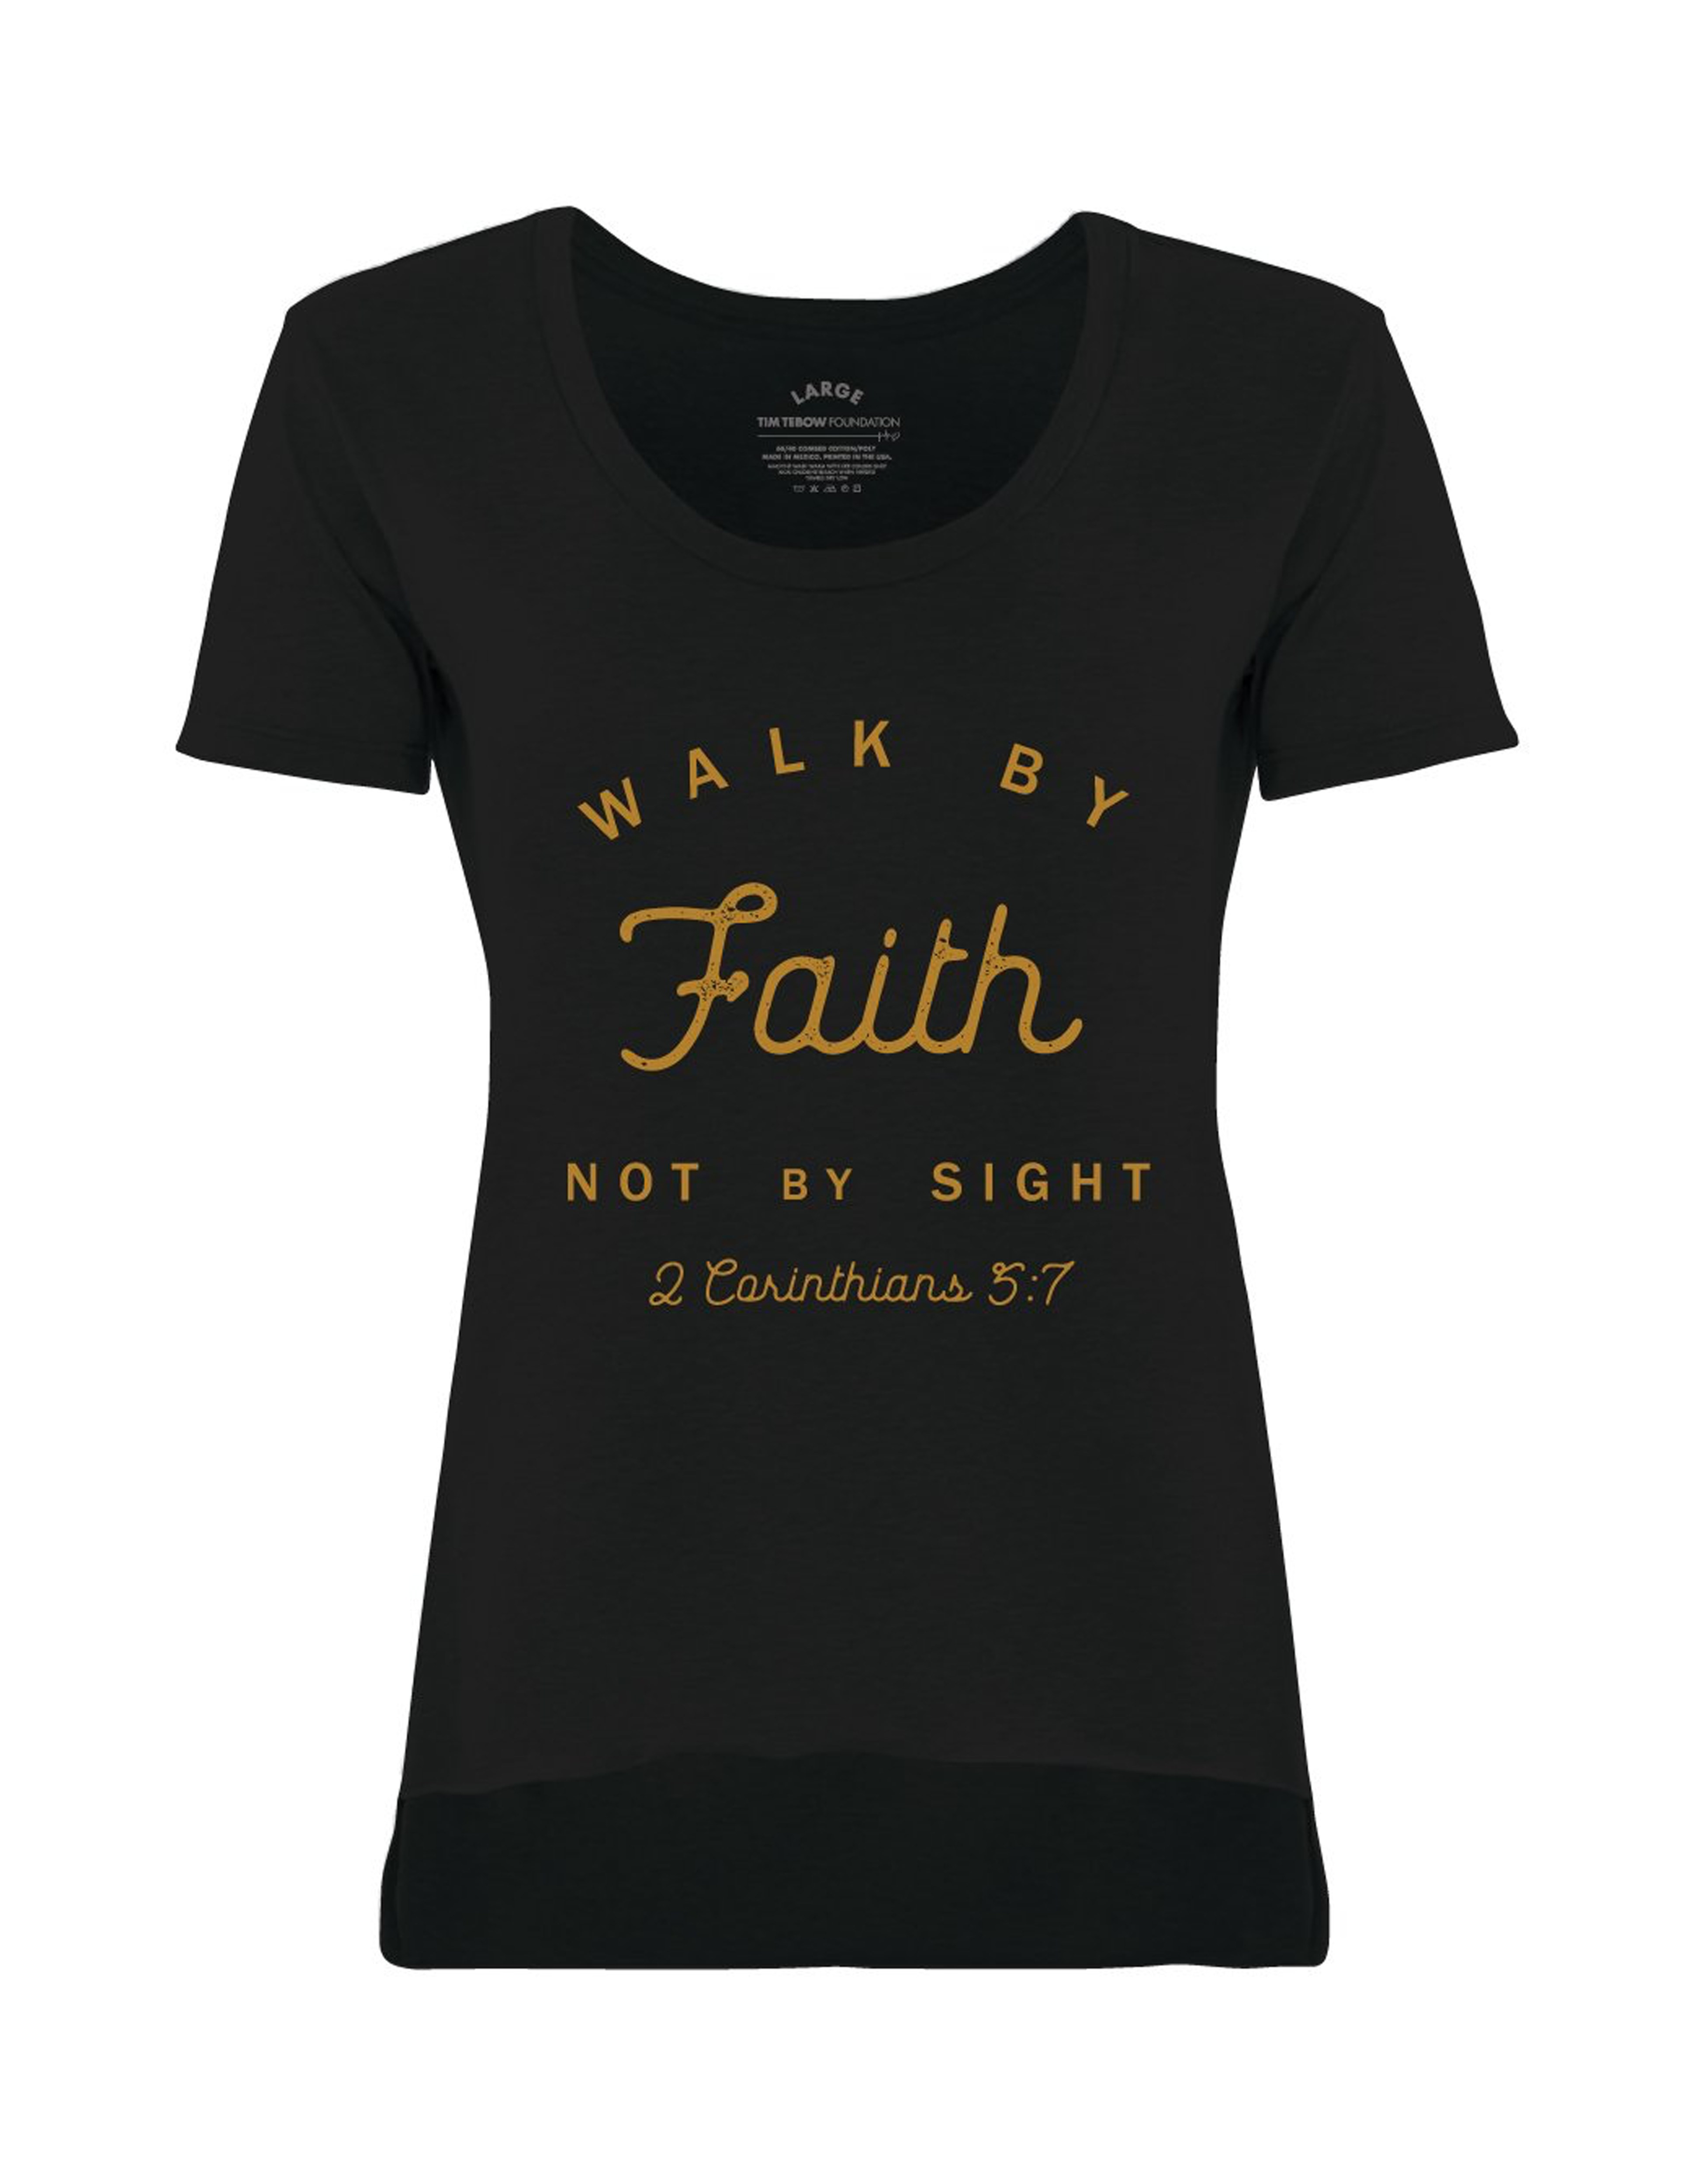 RBR Walk By Faith T-Shirt Youth